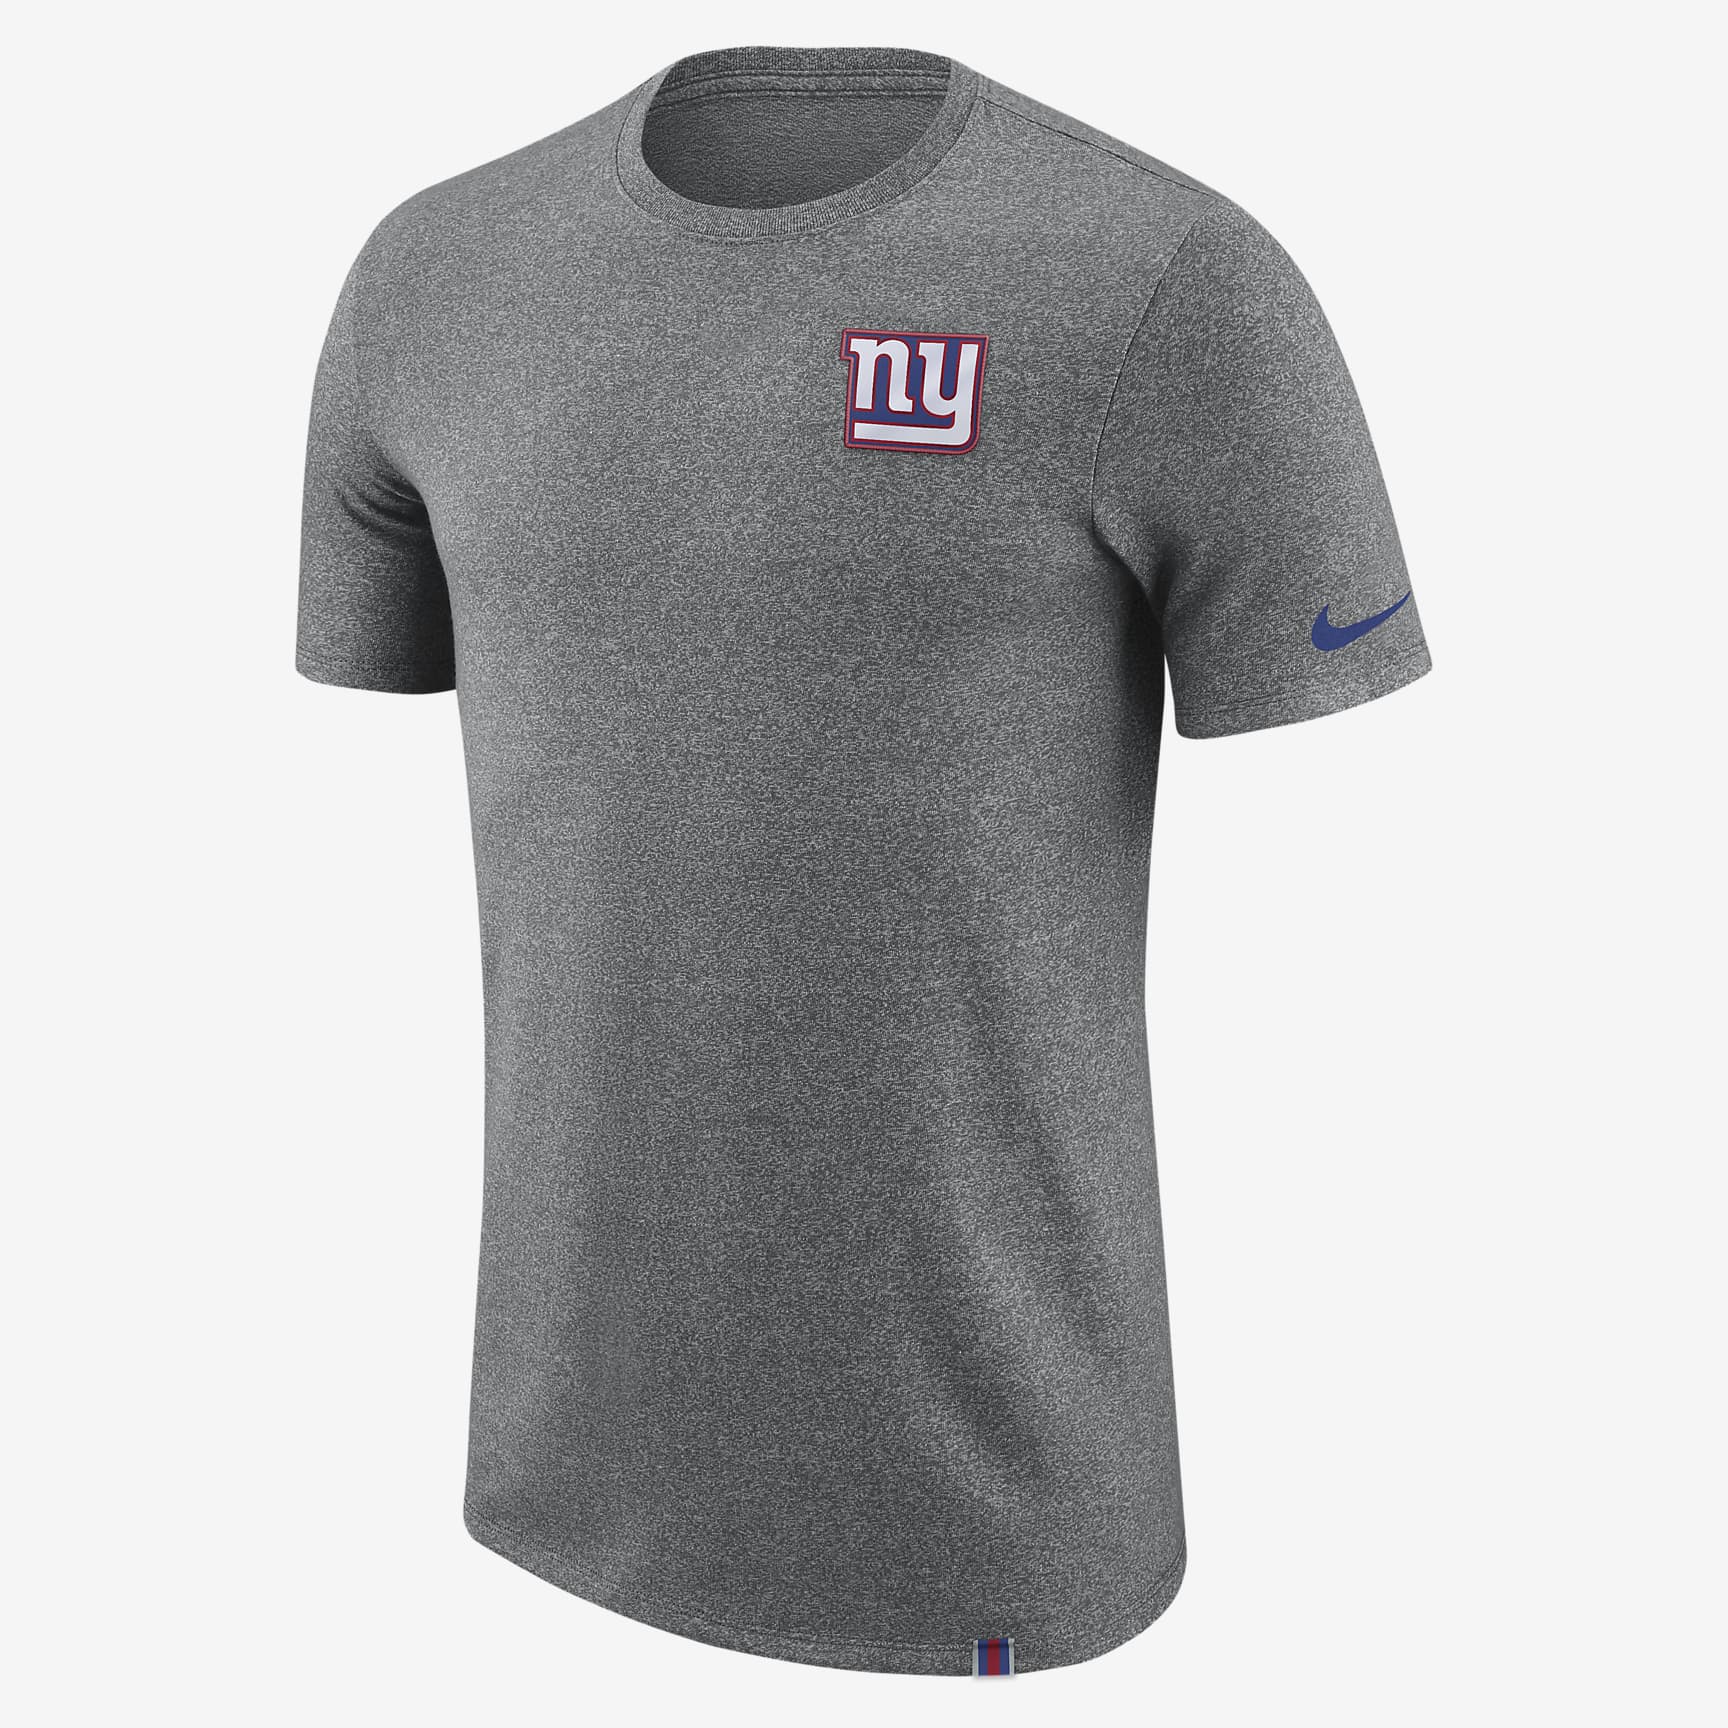 Nike Dry Marled Patch (NFL Giants) Men's T-Shirt. Nike RO